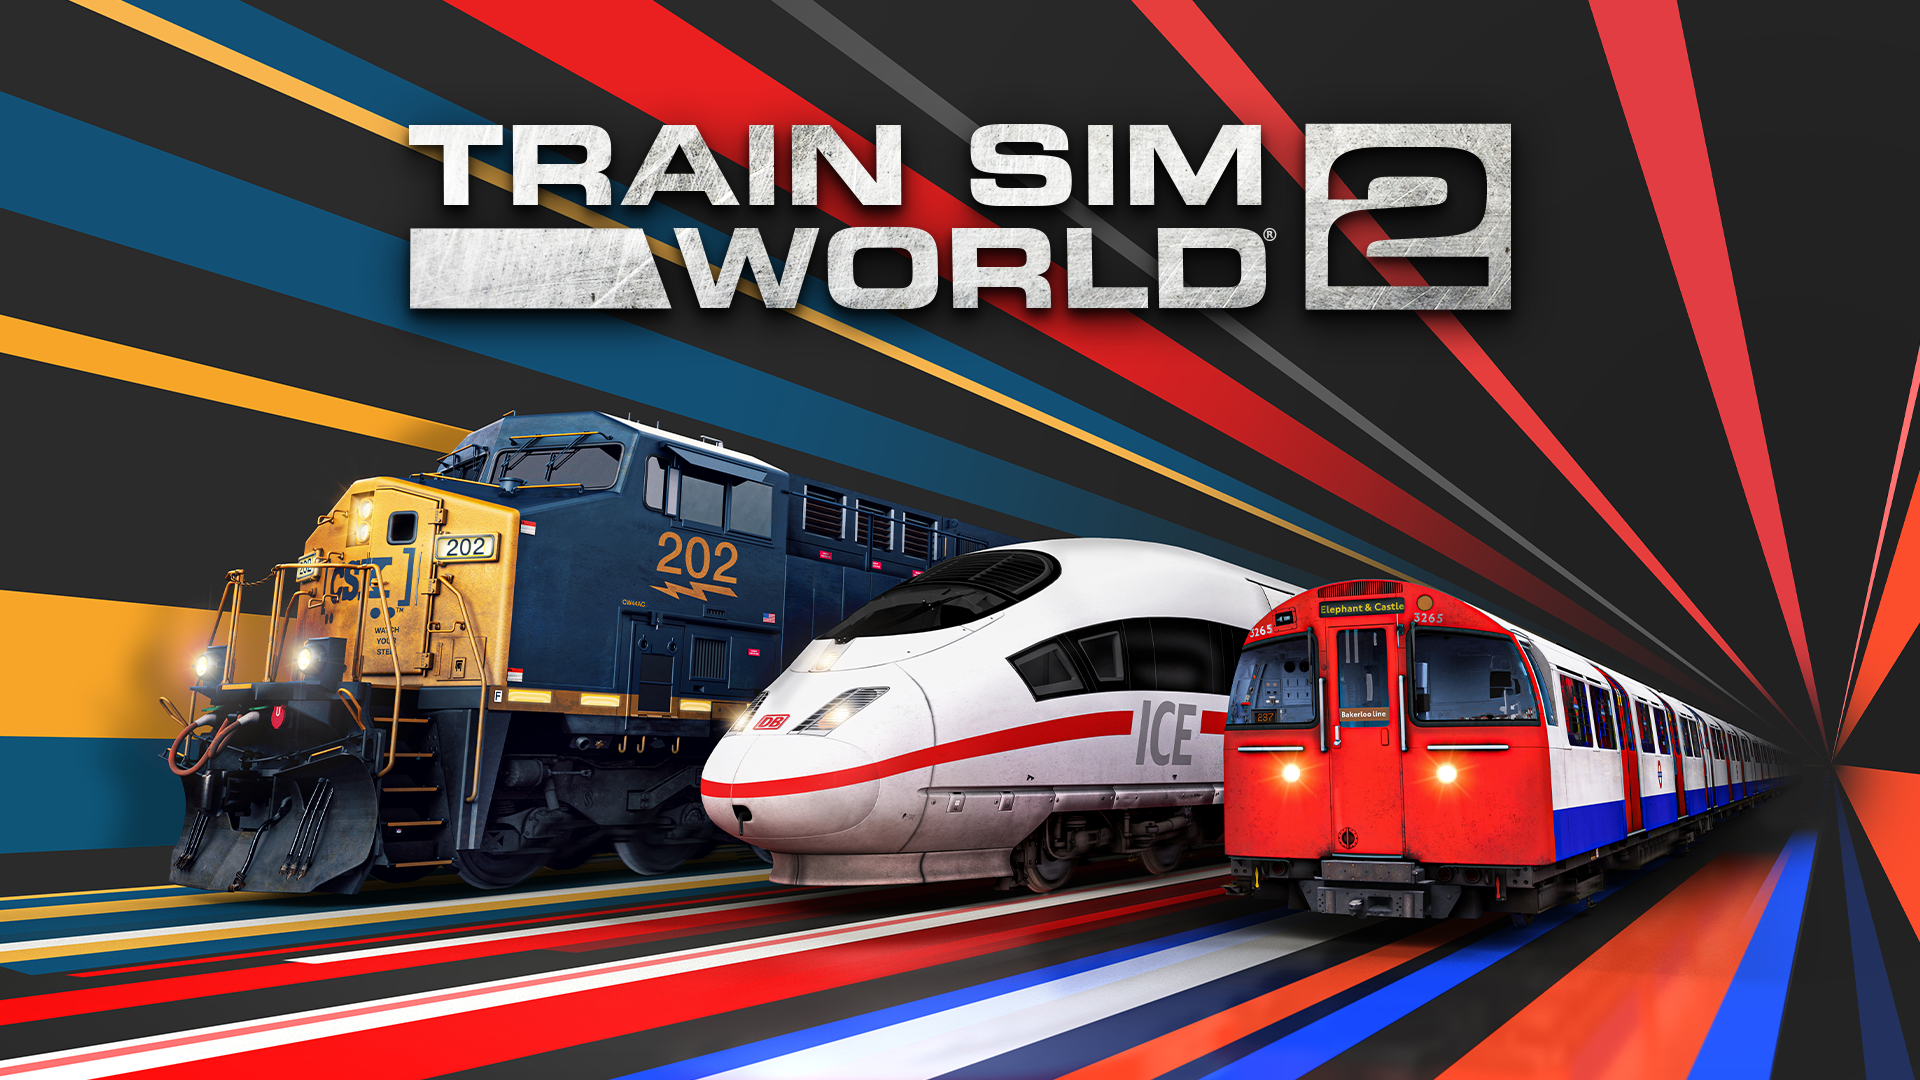 Dovetail Train Sim World 2